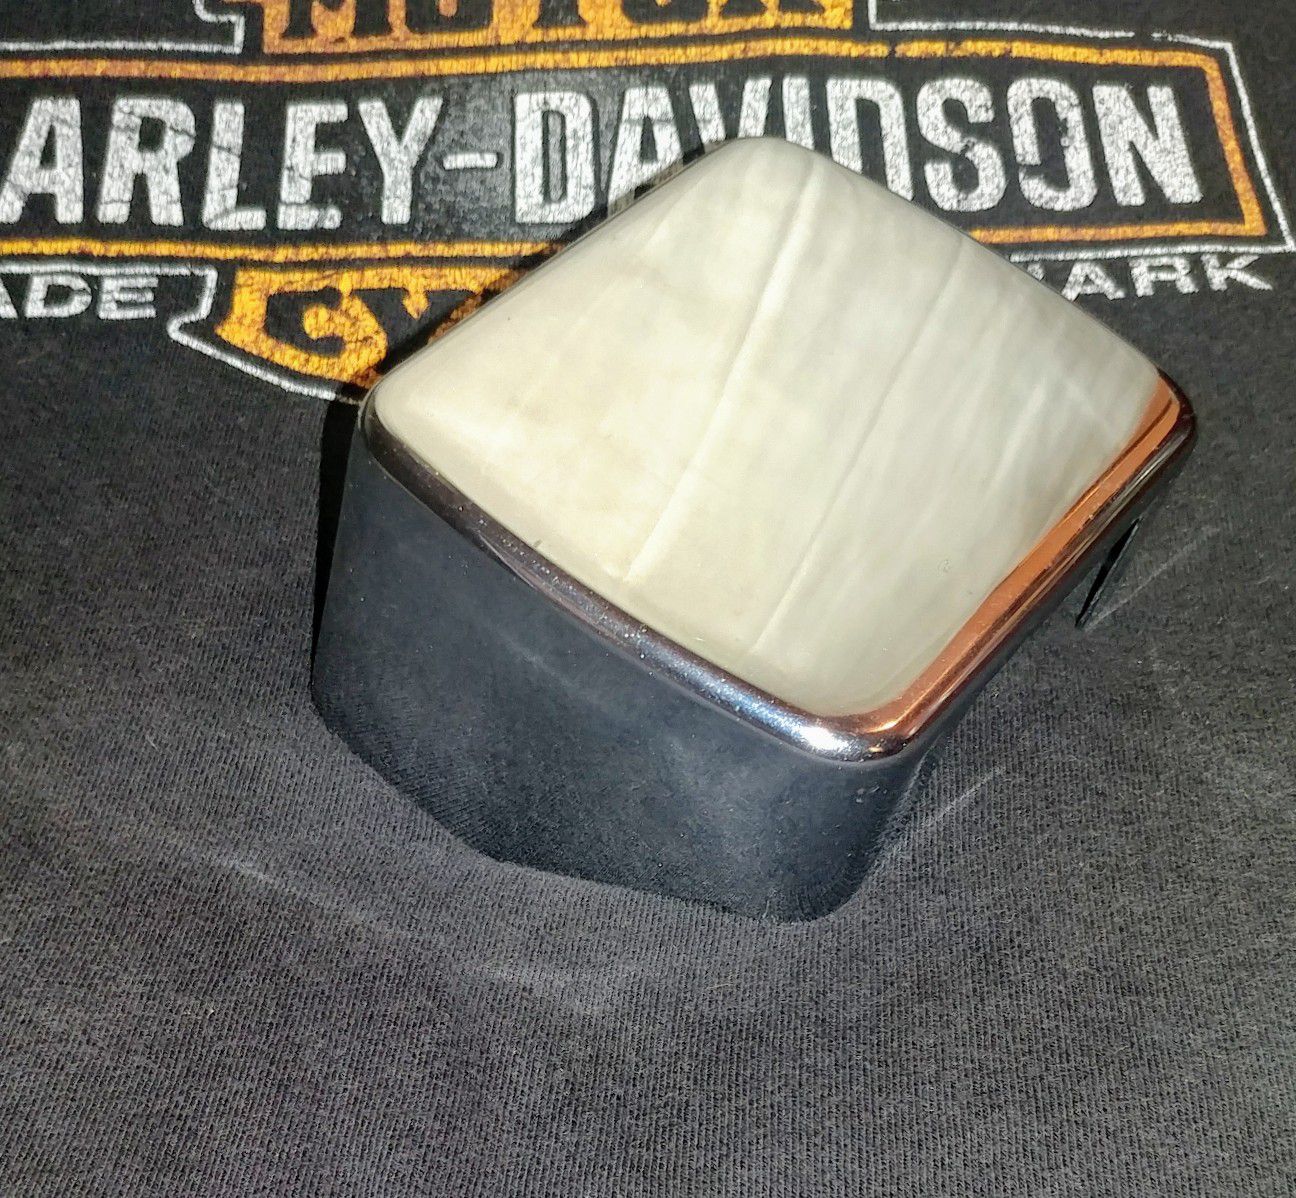 $18 Harley Davidson Chrome Coil Cover 1965-84 FL FLST FX Softail